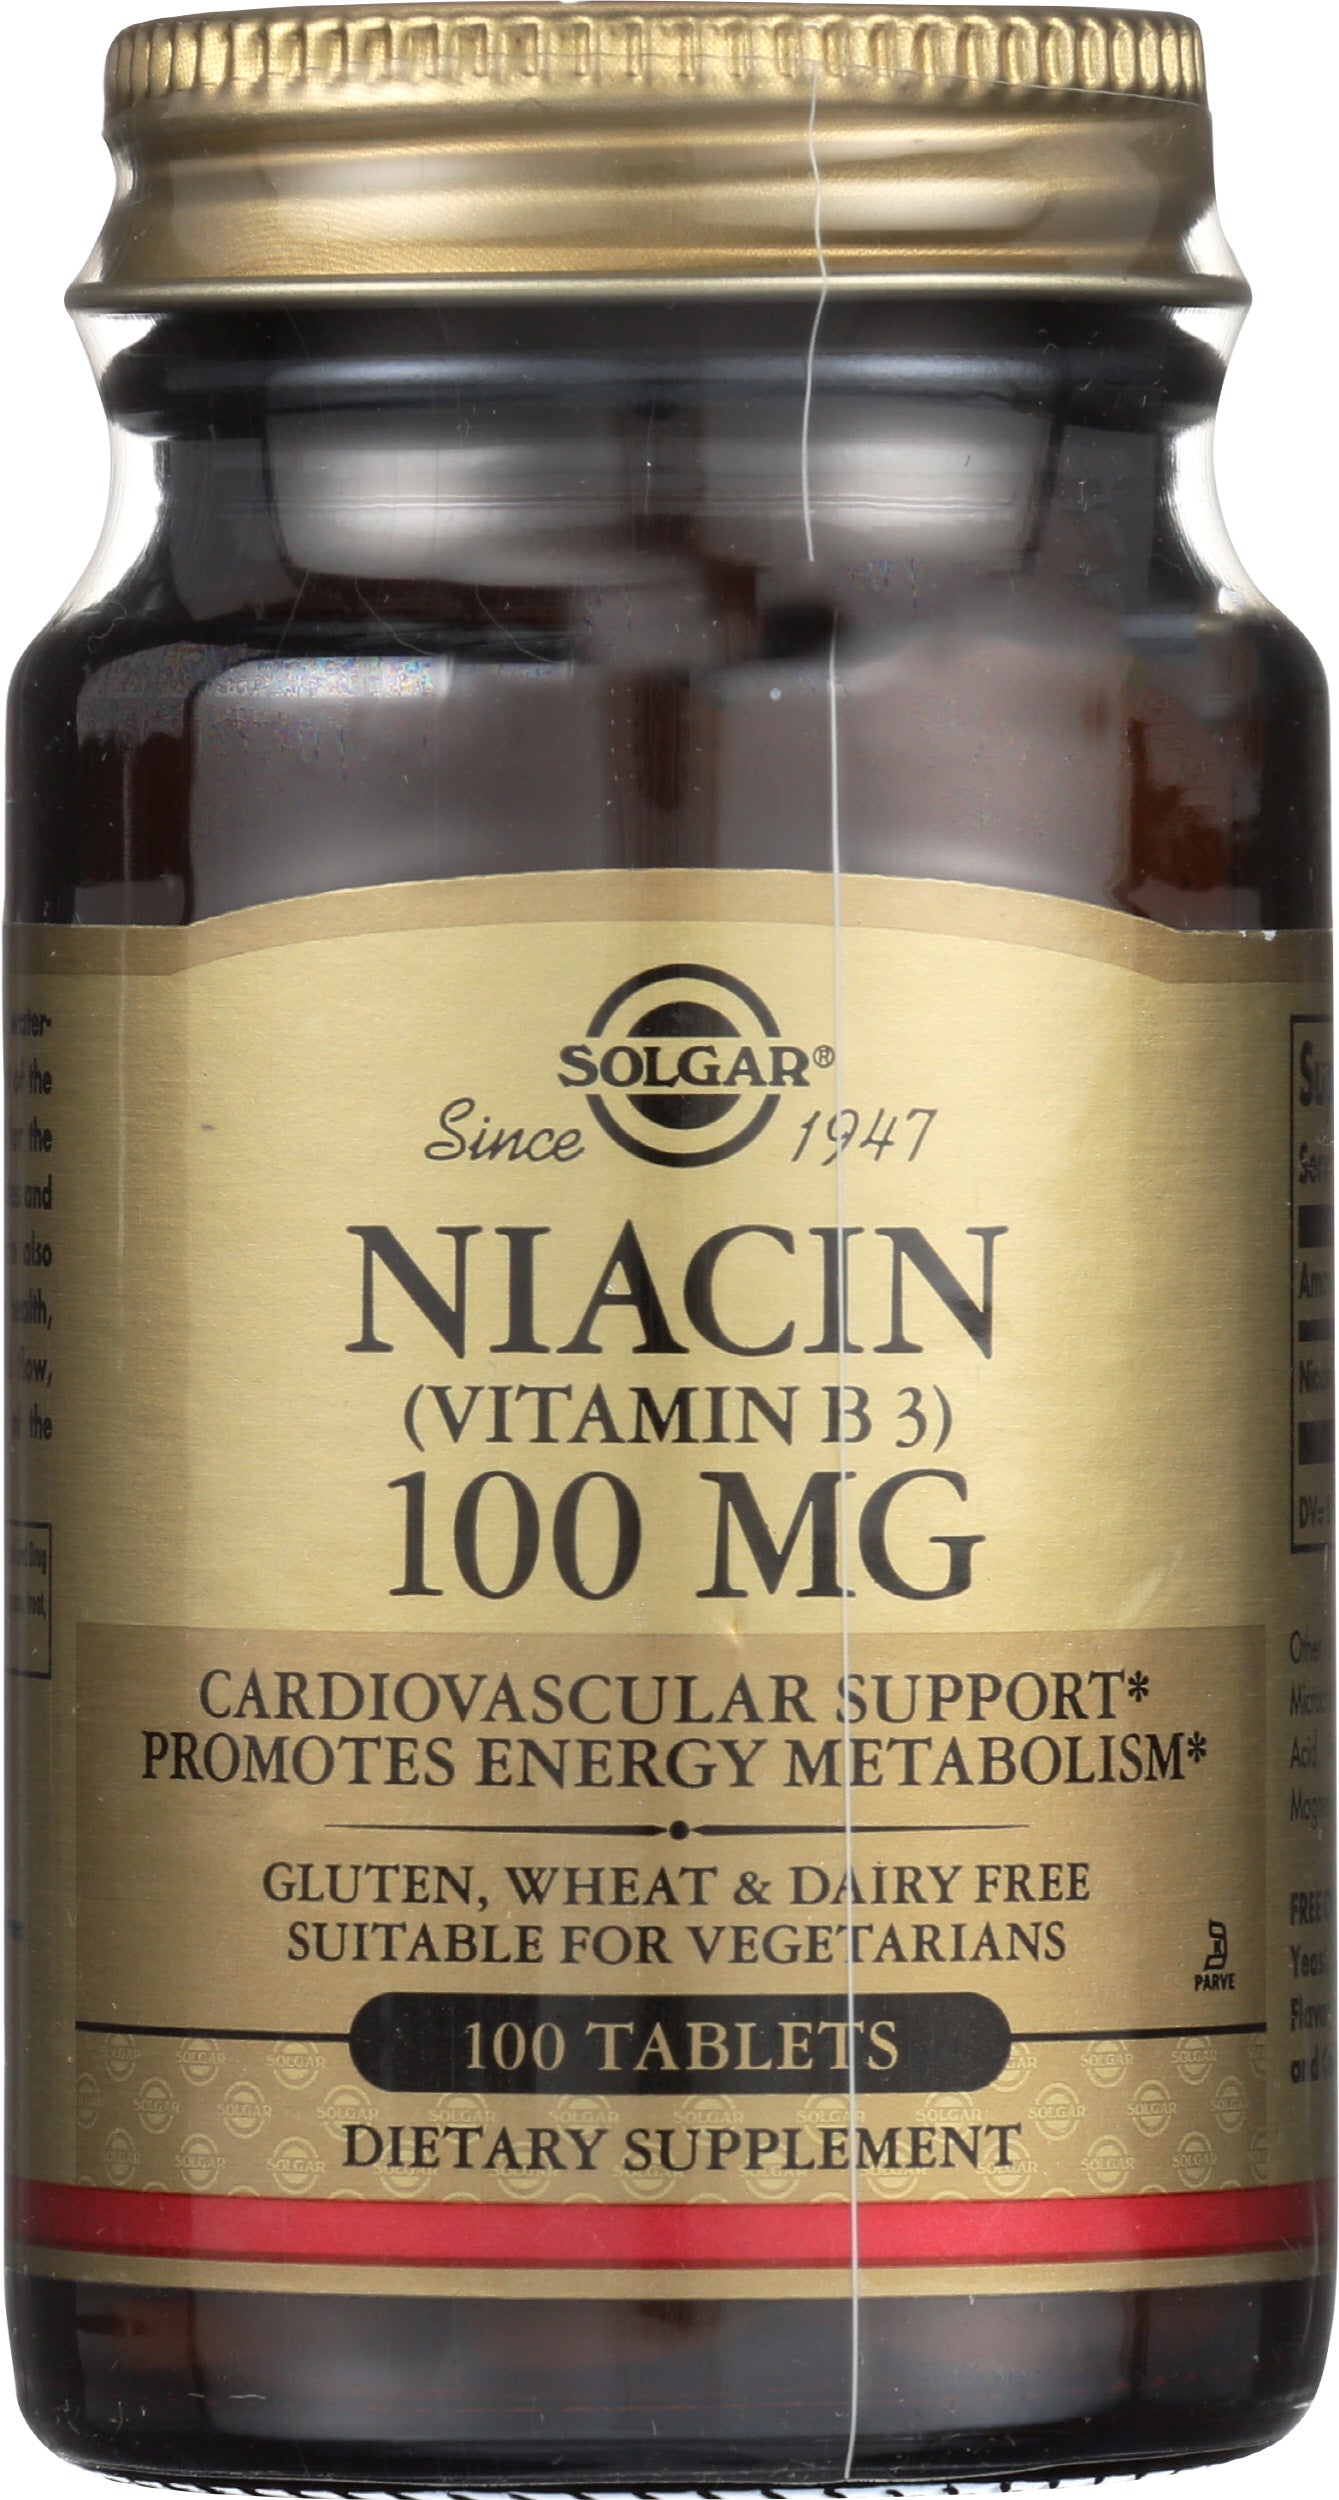 Solgar Niacin (Vitamin B3) 100 mg 100 Tablets Front of Bottle